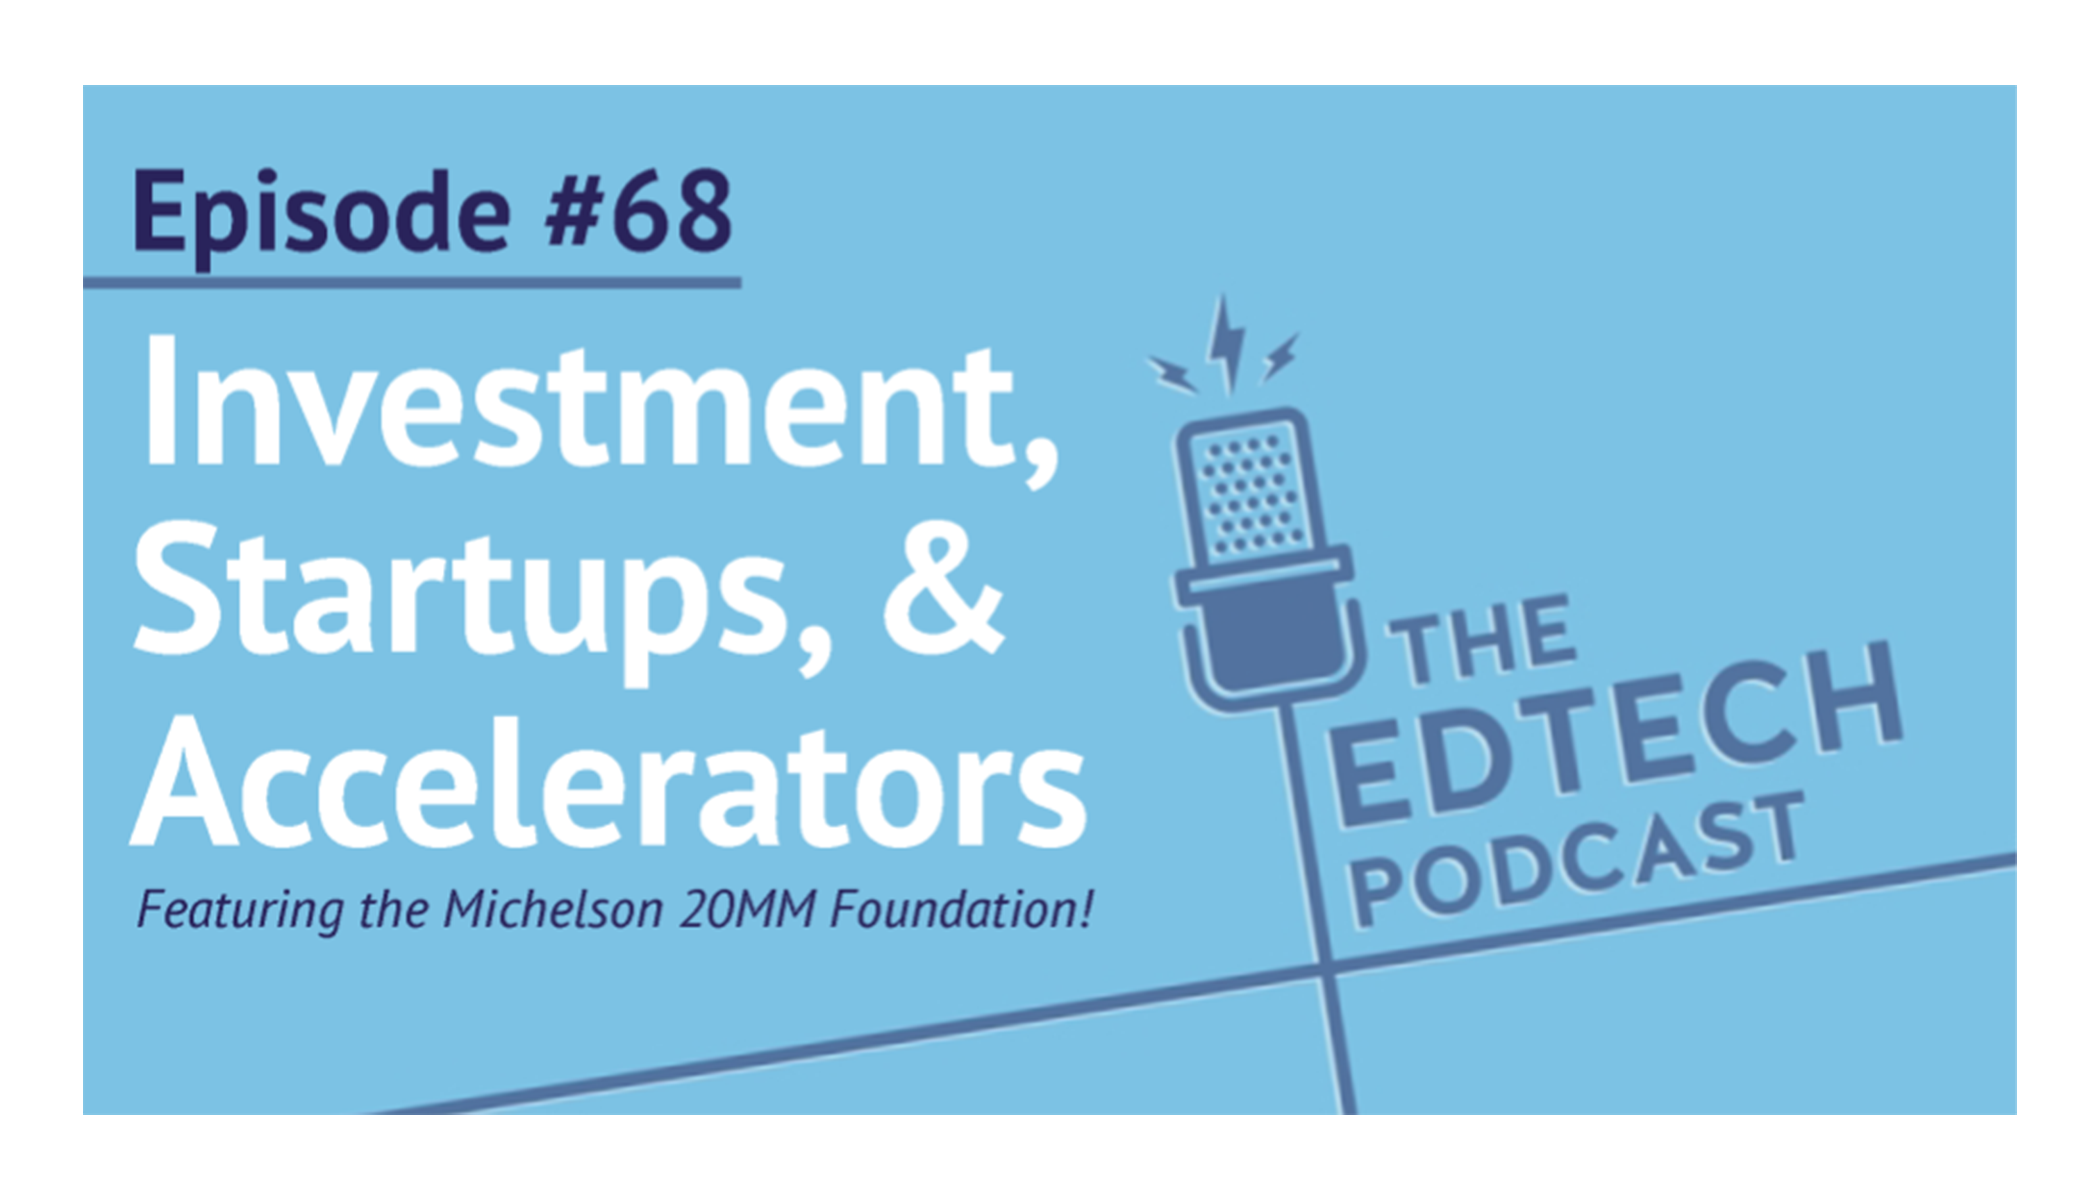 Episode 68: Investment, Startups, & Accelerators